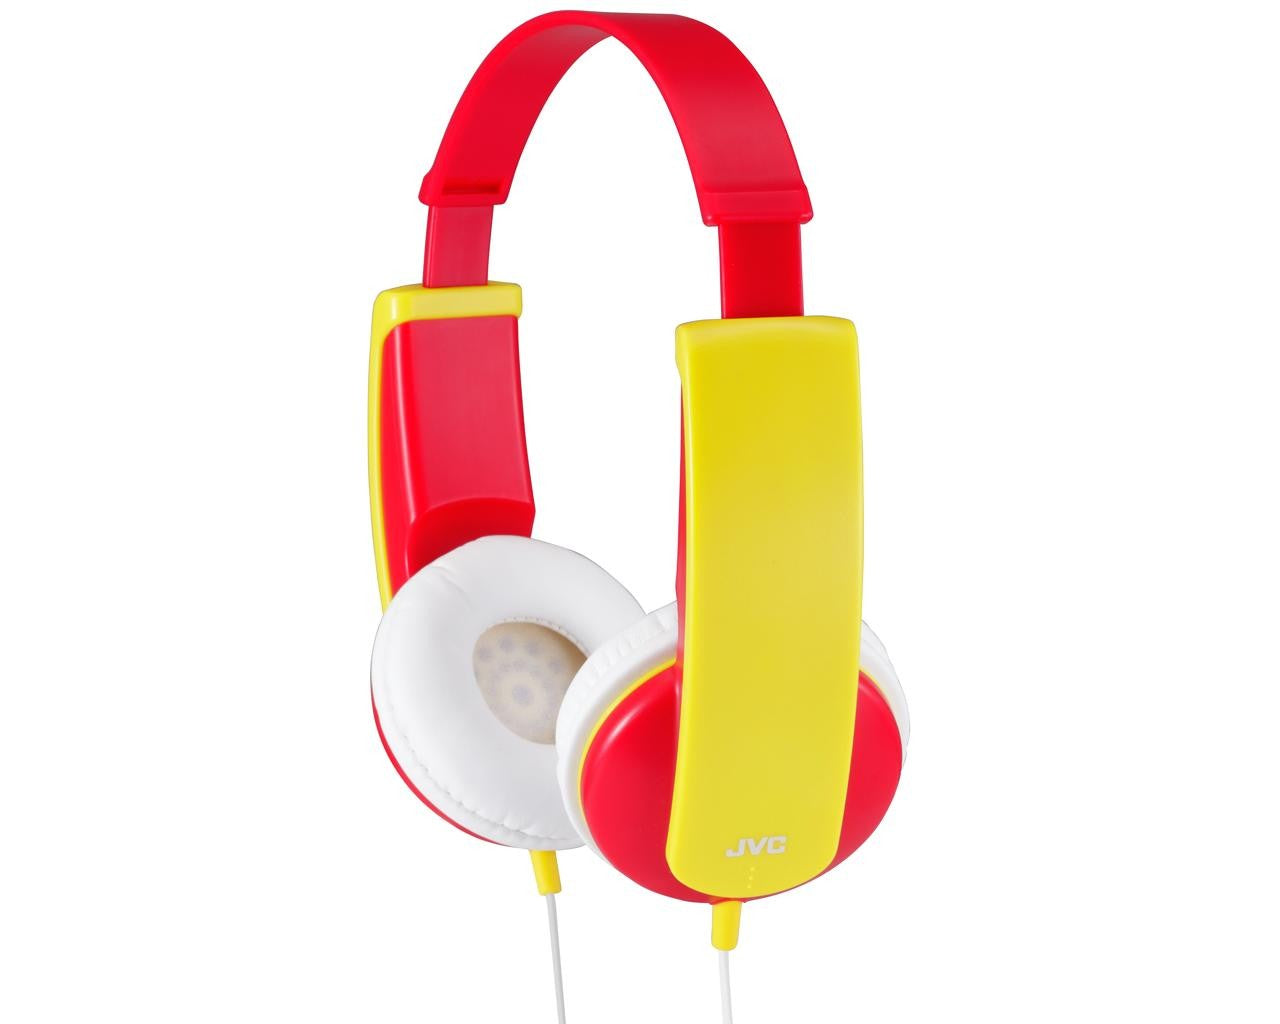 JVC Wired On-ear Kids Headphone